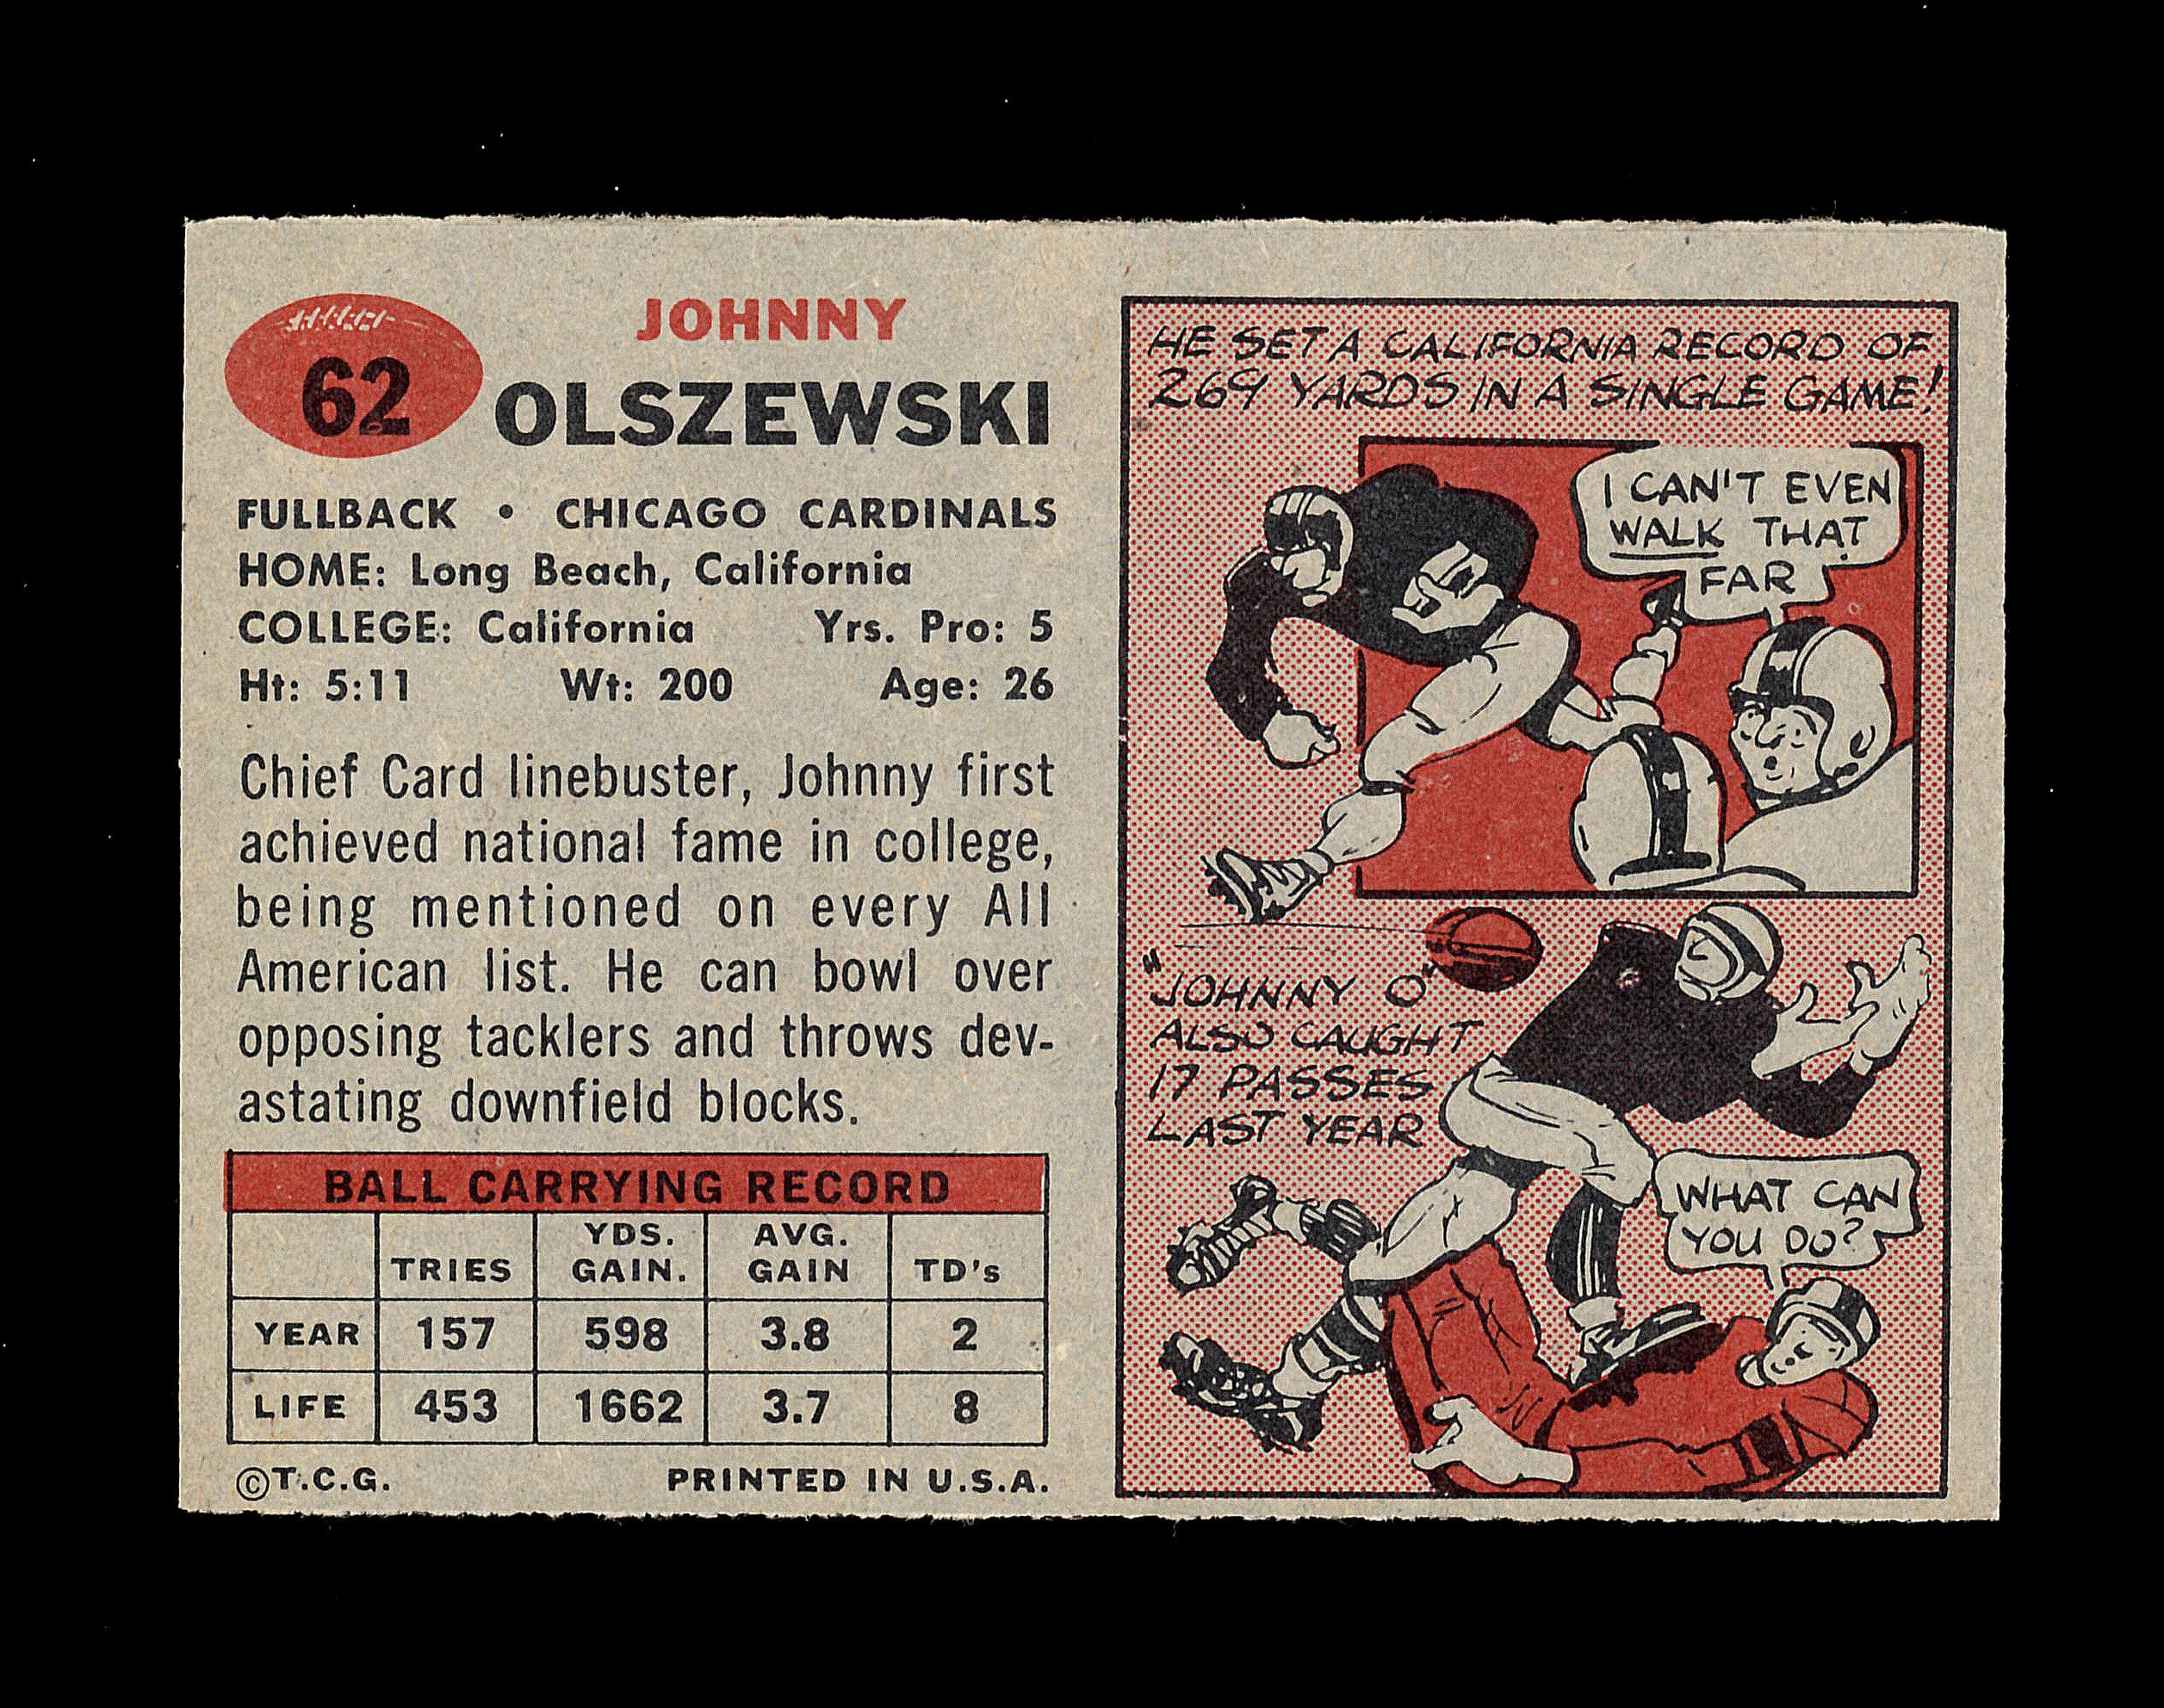 1957 Topps Football Card #62 Johnny Olszewski Chicago Cardinals.